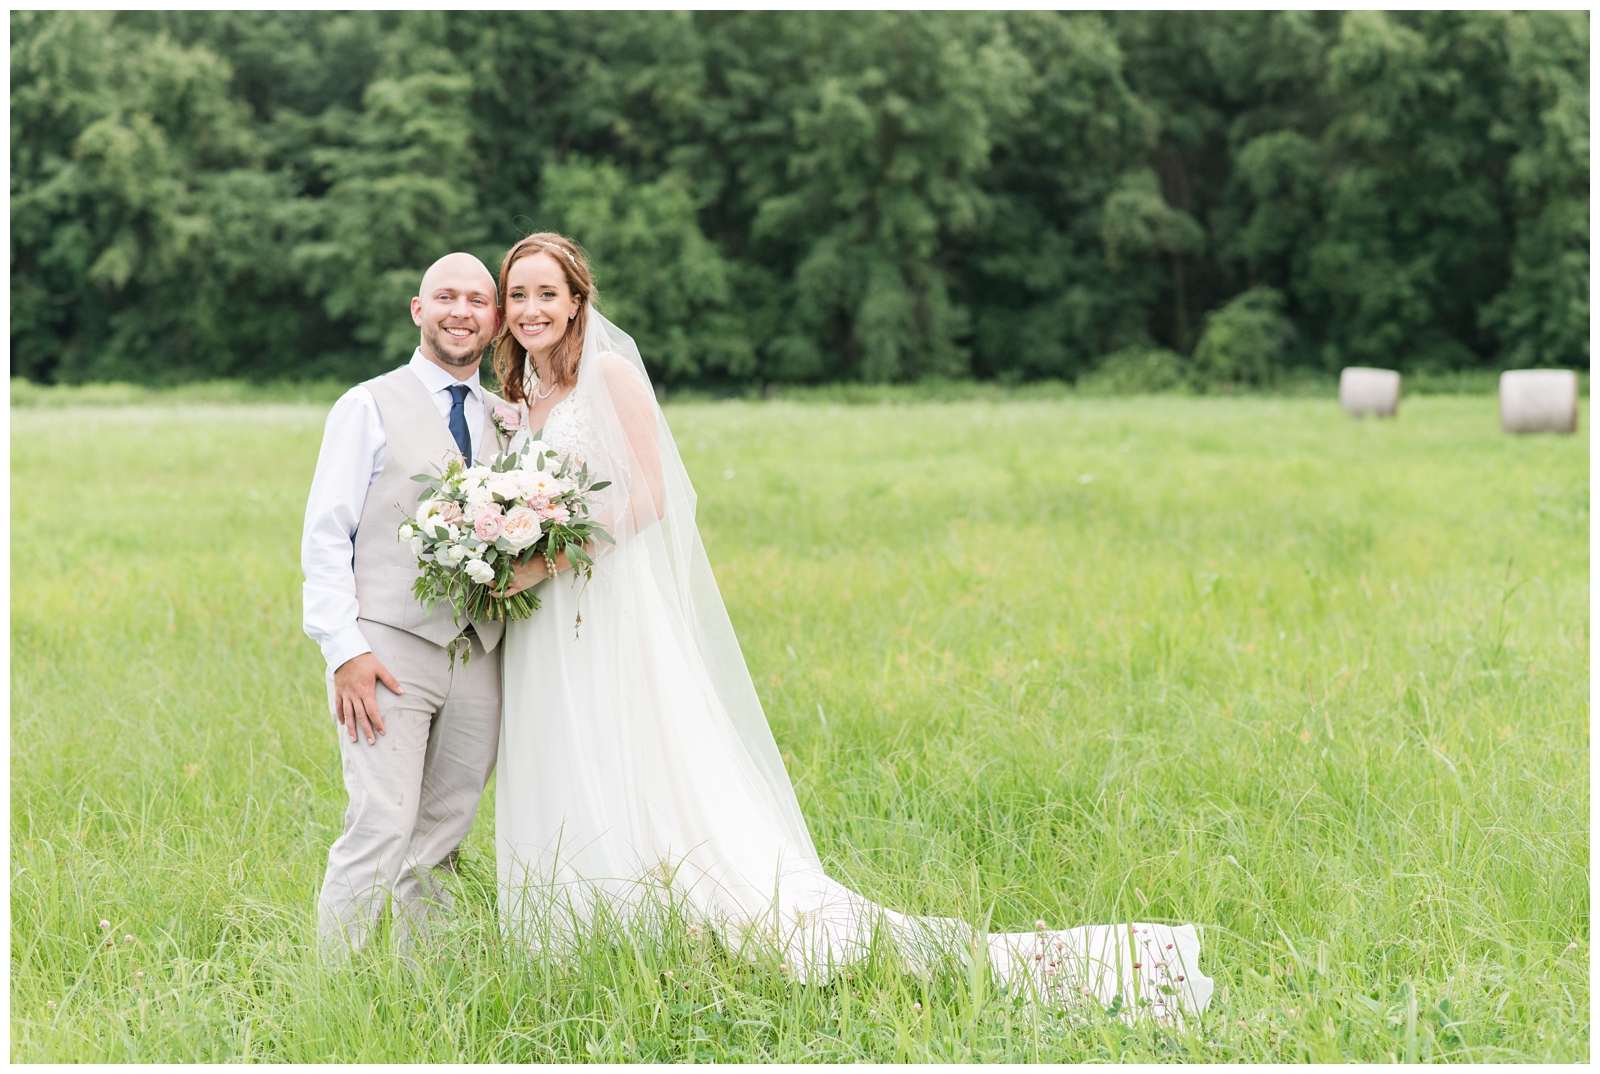 Oak Grove Jorgensen Farms wedding portraits in field of bride and groom cheek to cheek